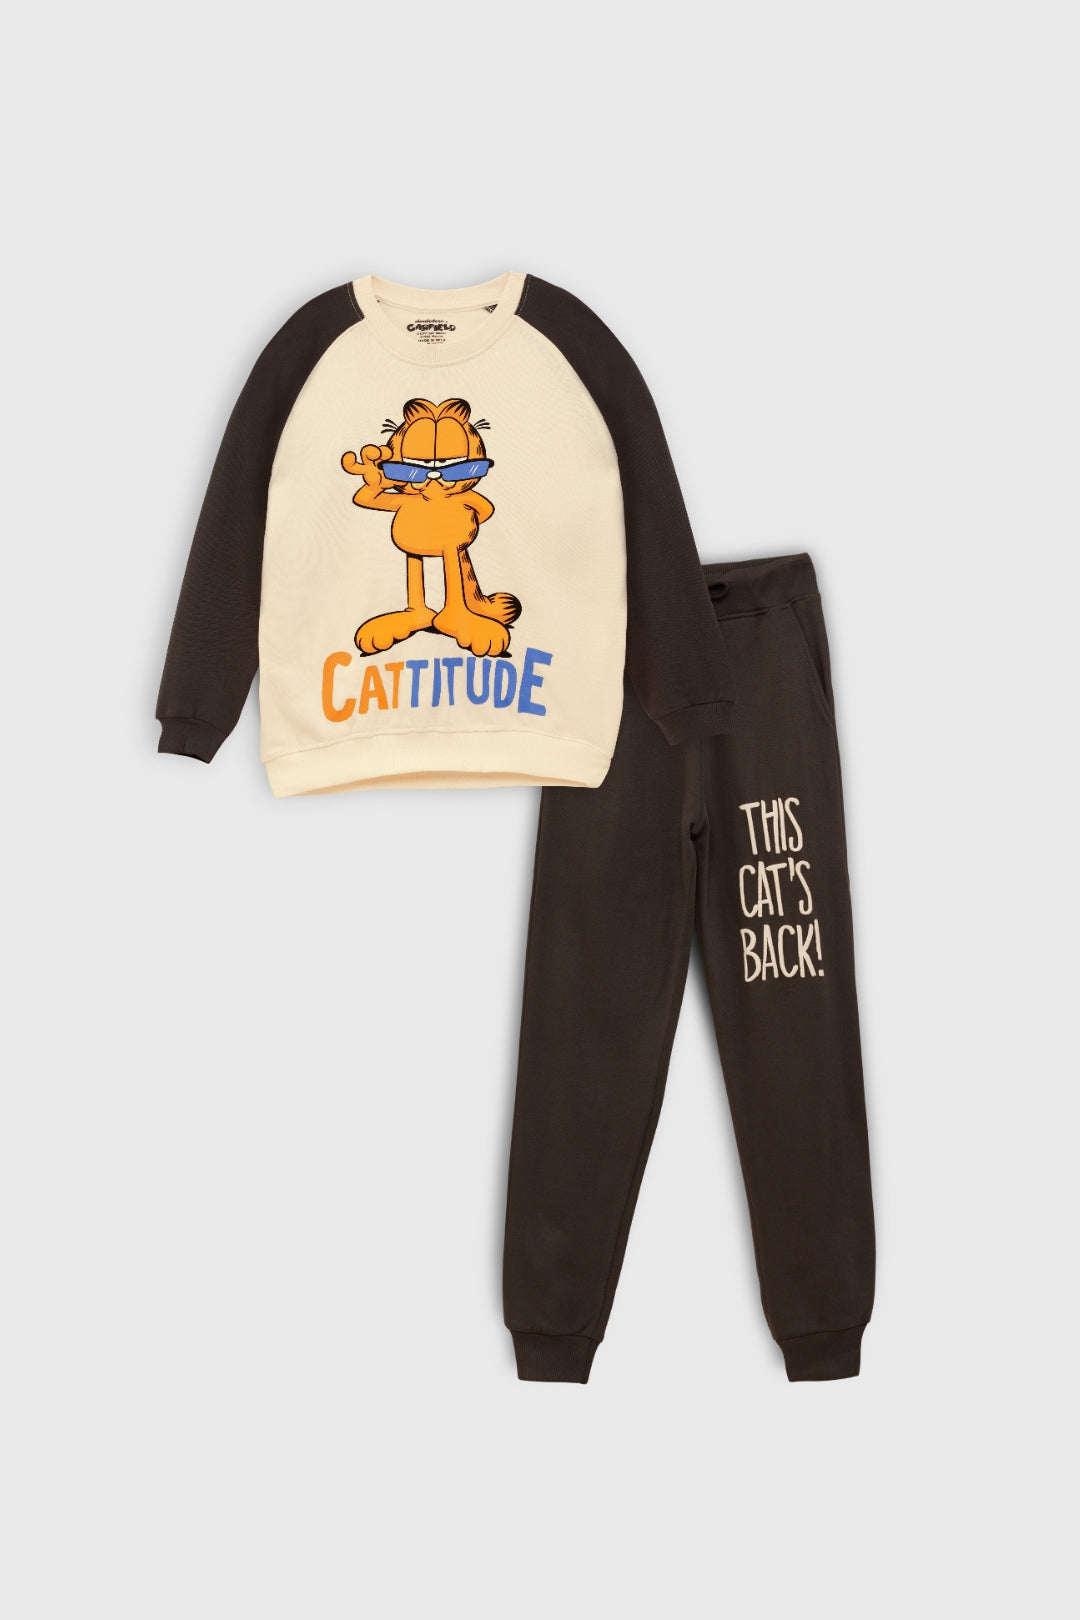 Garfield Cattitude Co-ord set